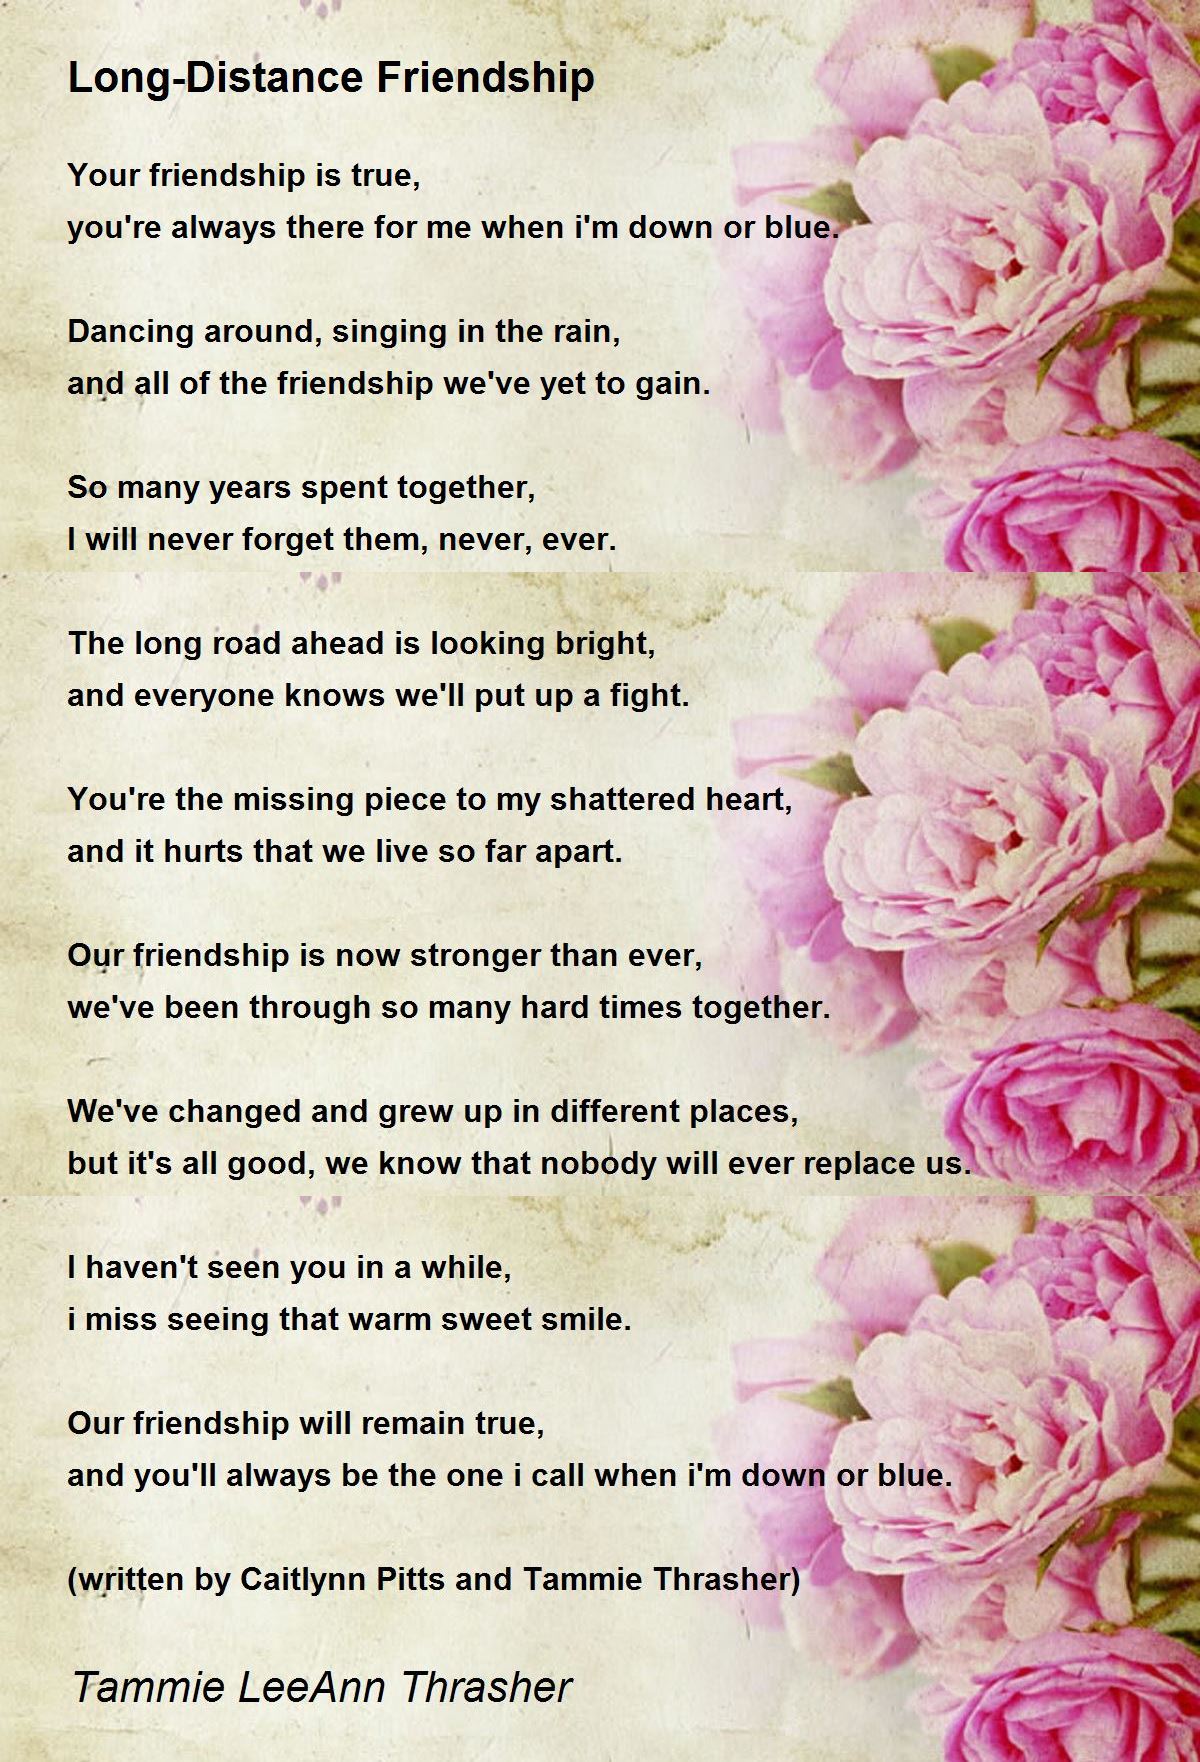 Long-Distance Friendship - Long-Distance Friendship Poem by Tammie Thrasher